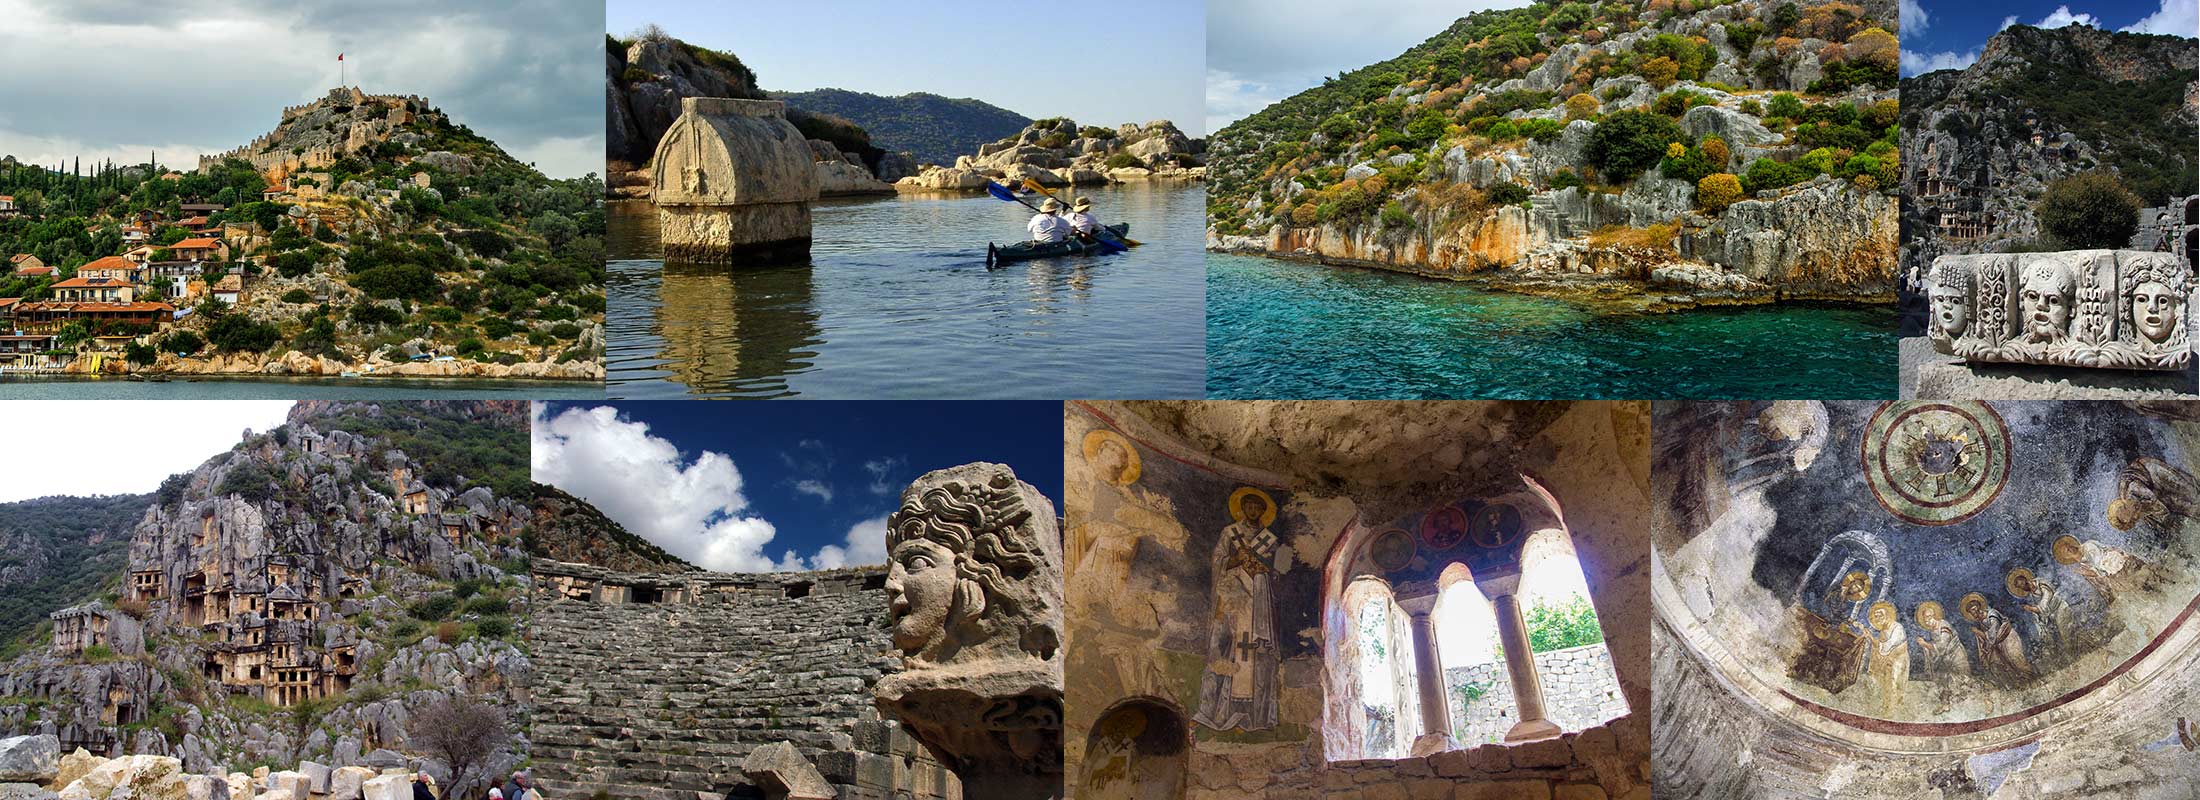 daily-antalya-tour-myra-saint-nicholas-church-kekova-simena-castle-sunken-city